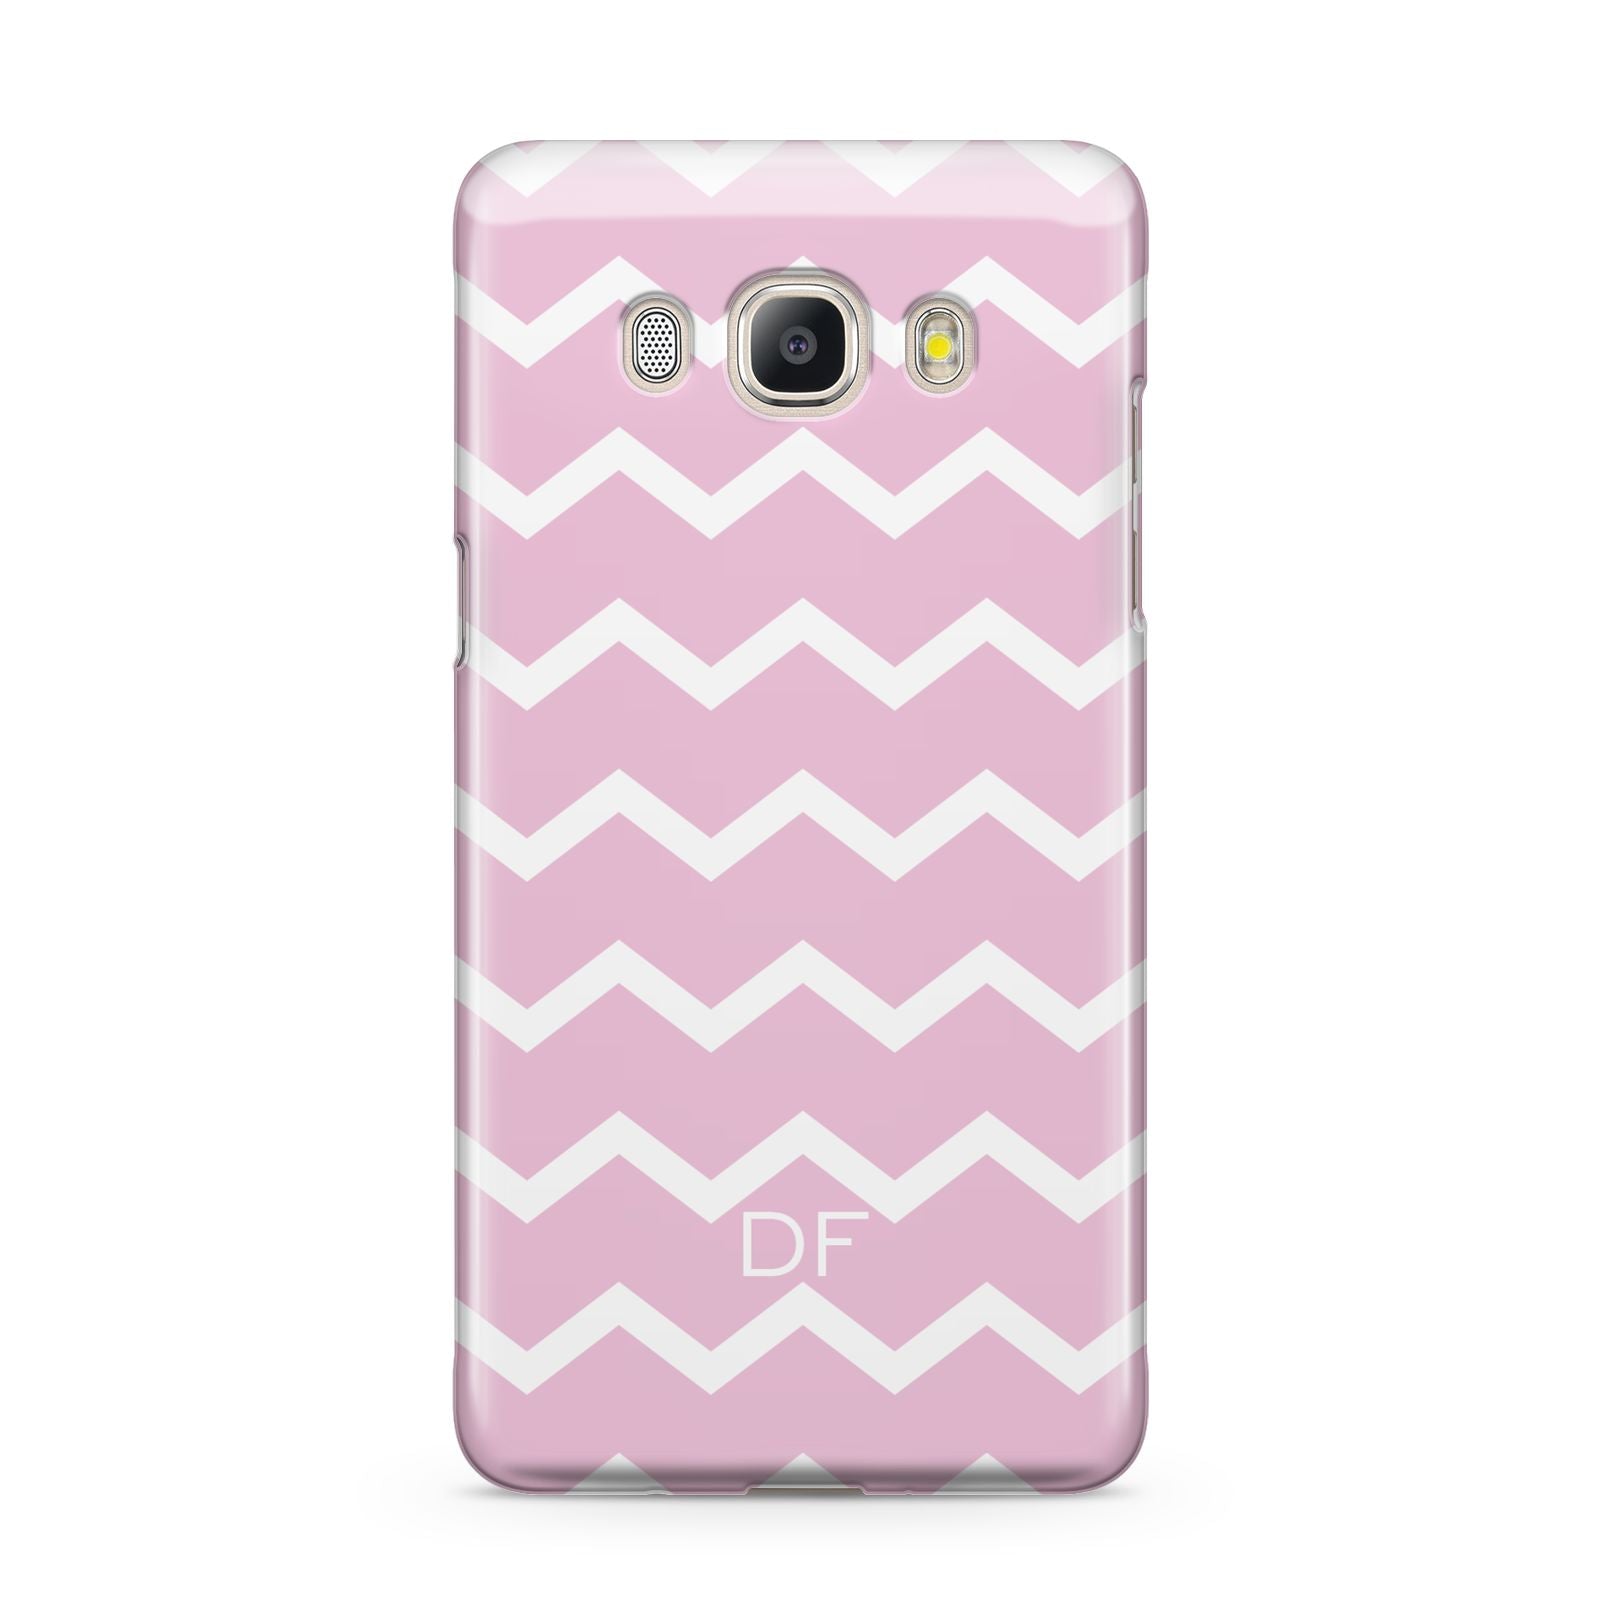 Personalised Chevron Pink Samsung Galaxy J5 2016 Case